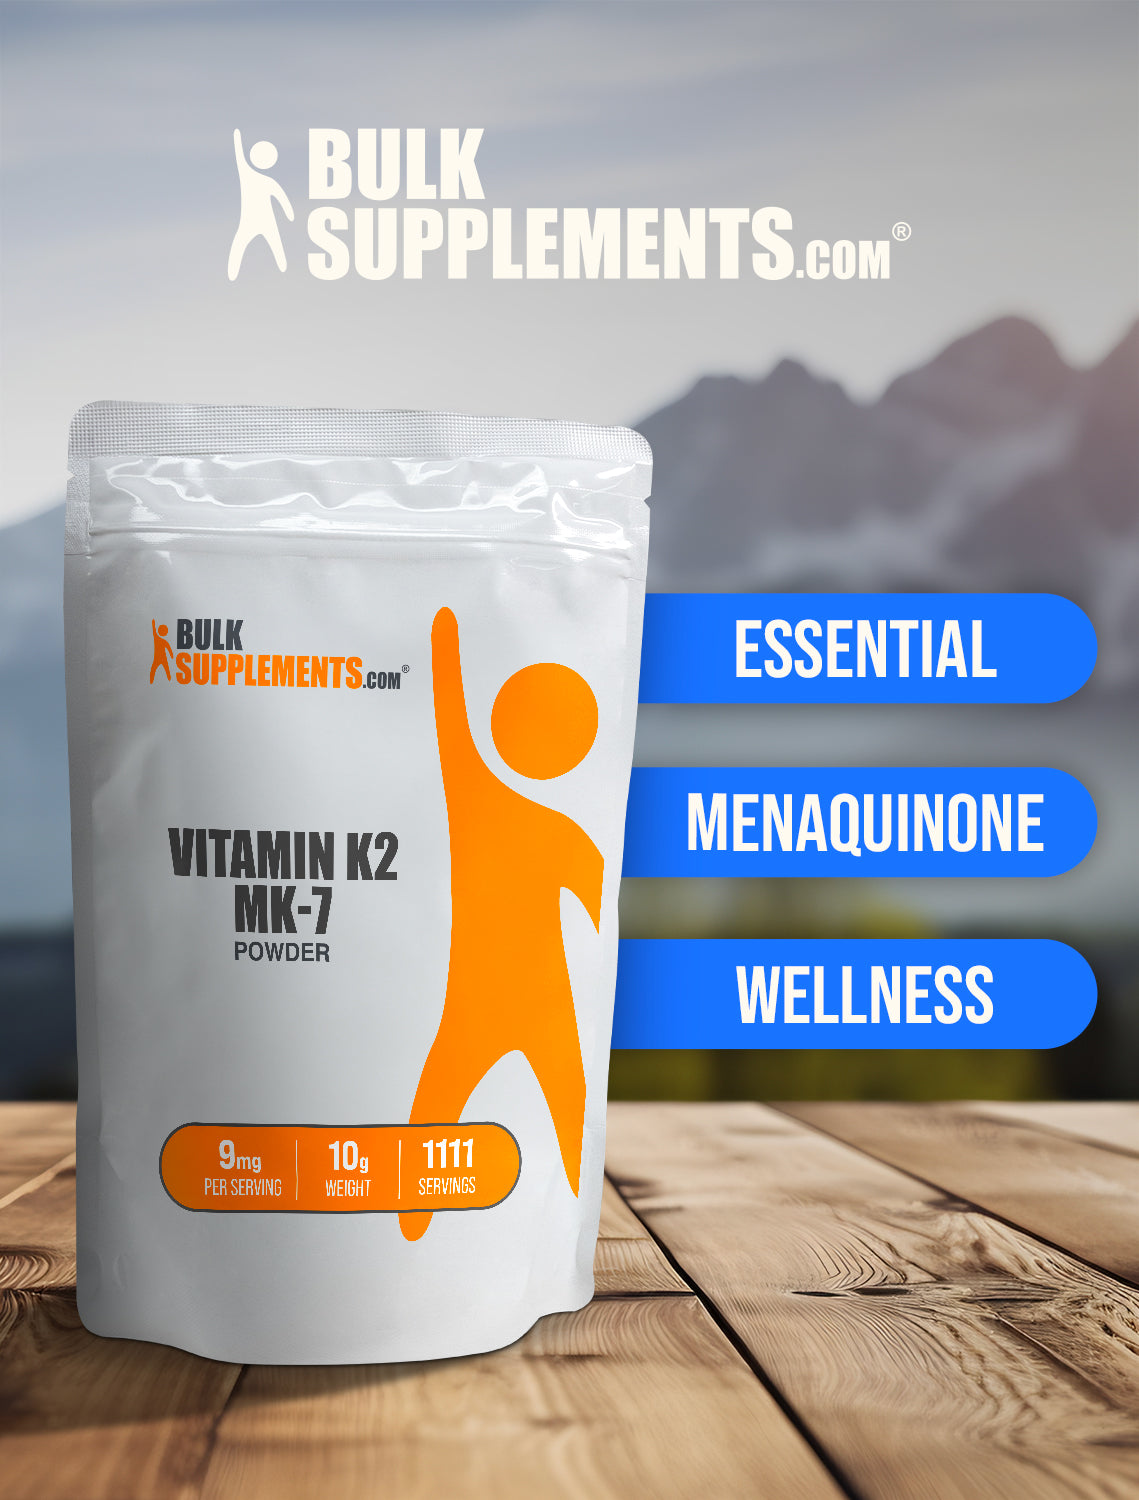 Vitamin K2 MK-7 powder keyword image 10g